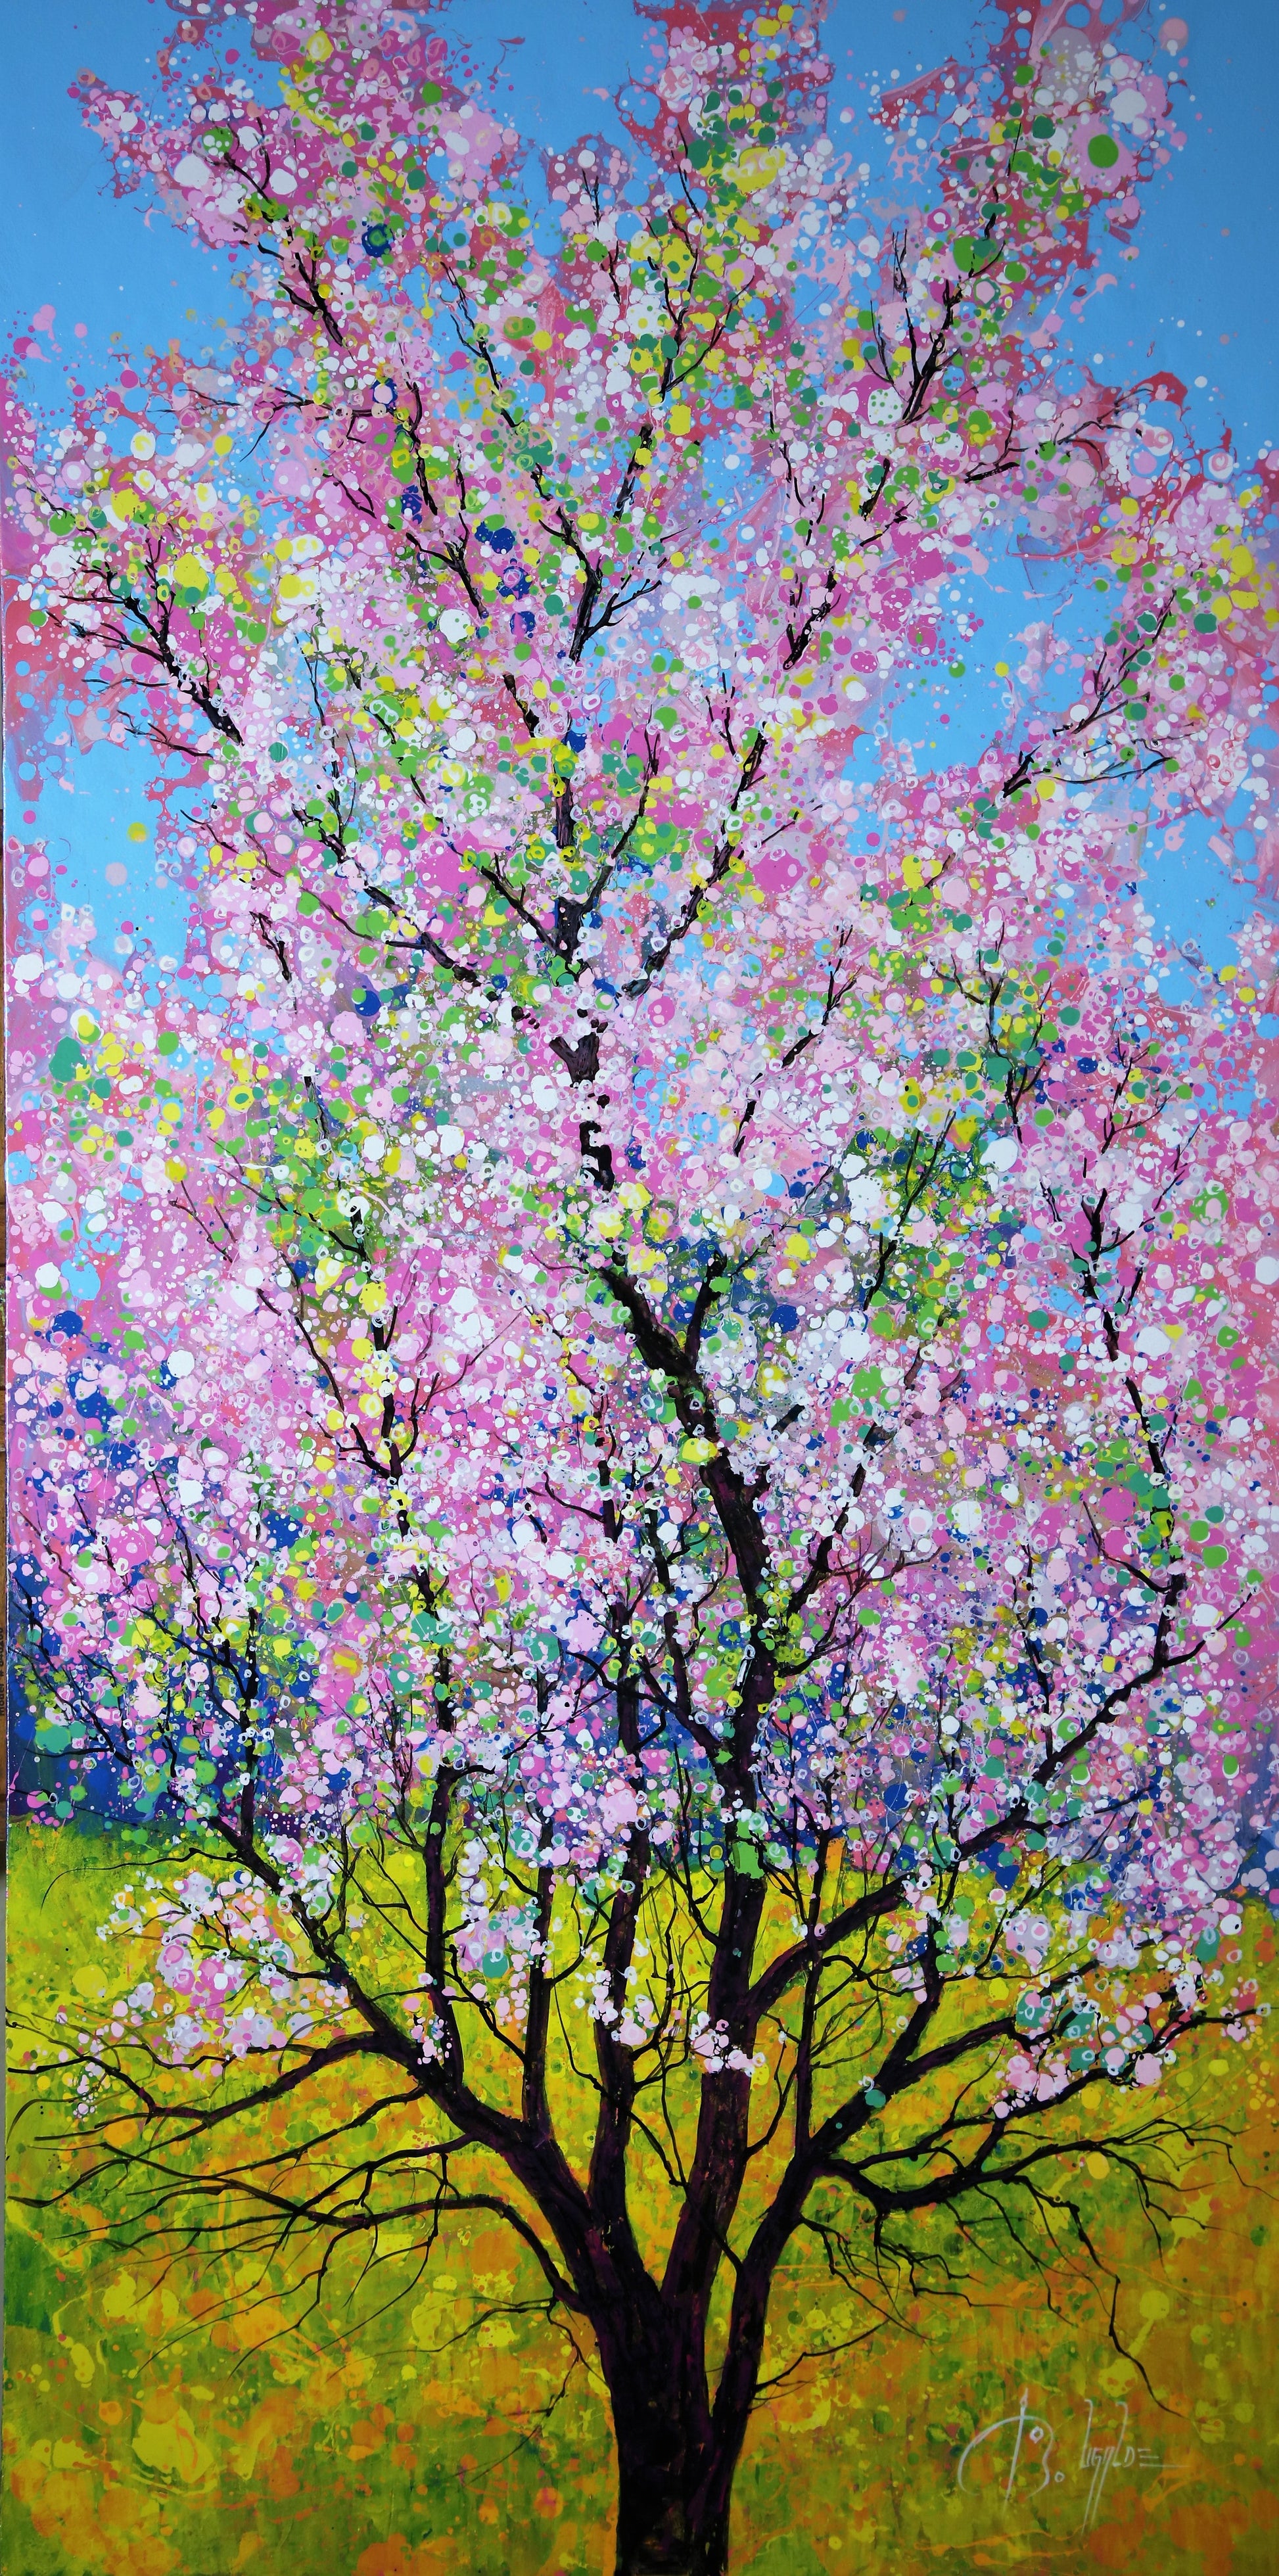 Blossom Pear Tree-Painting-Roberto Ugalde-Sorrel Sky Gallery